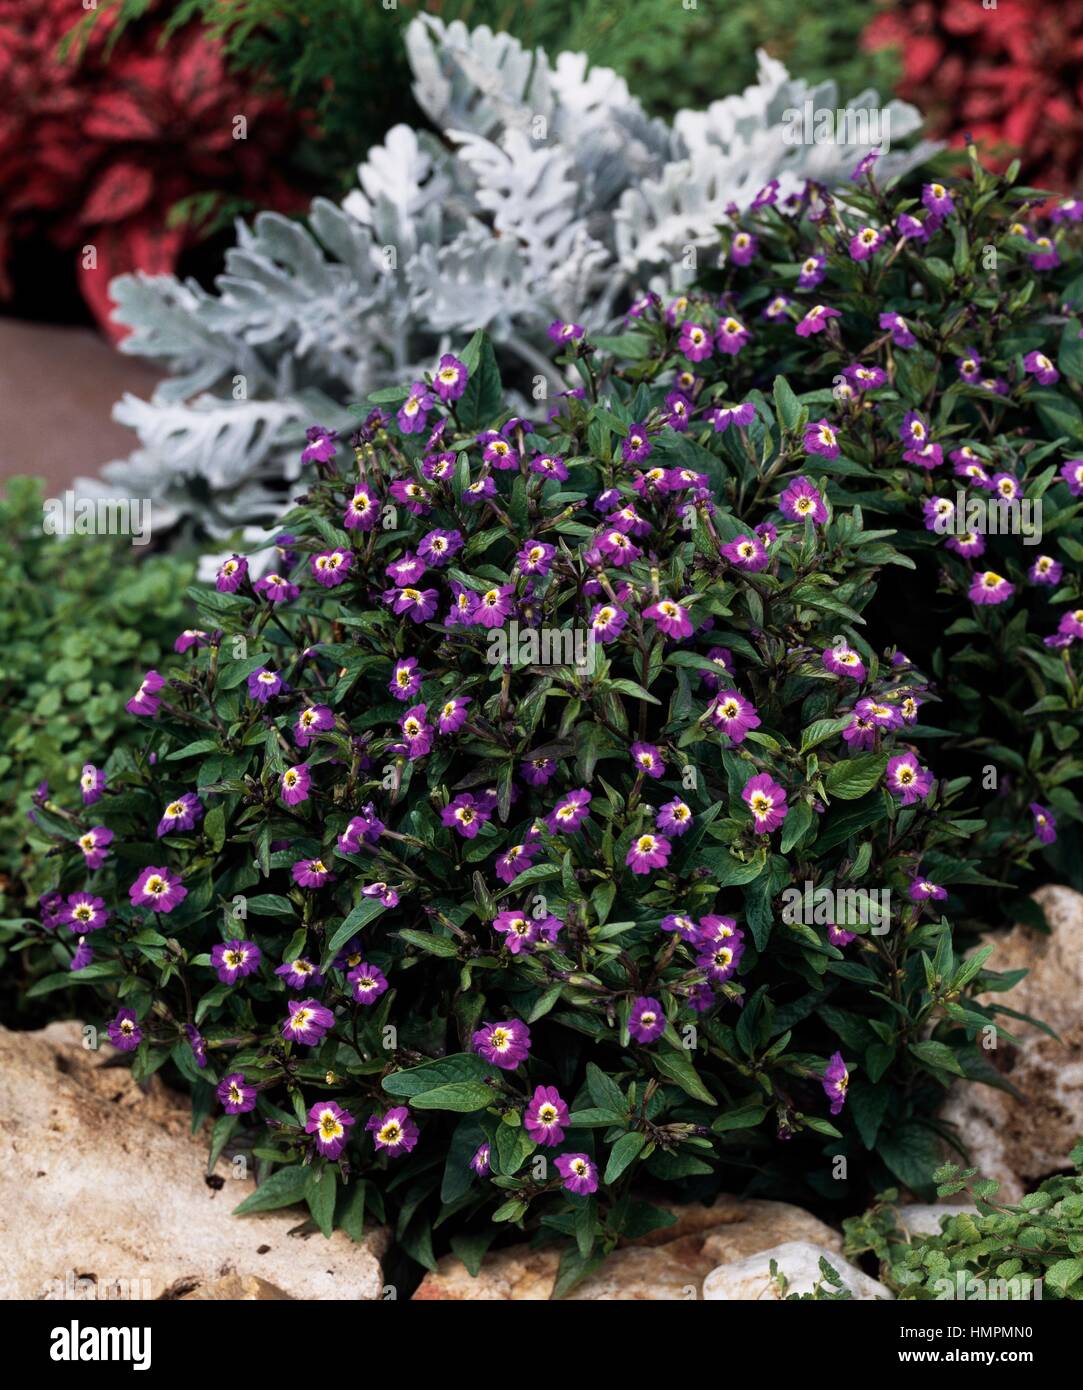 Amethyst flower or Bush violet (Browallia speciosa Dream hybrid), Solanaceae. Stock Photo